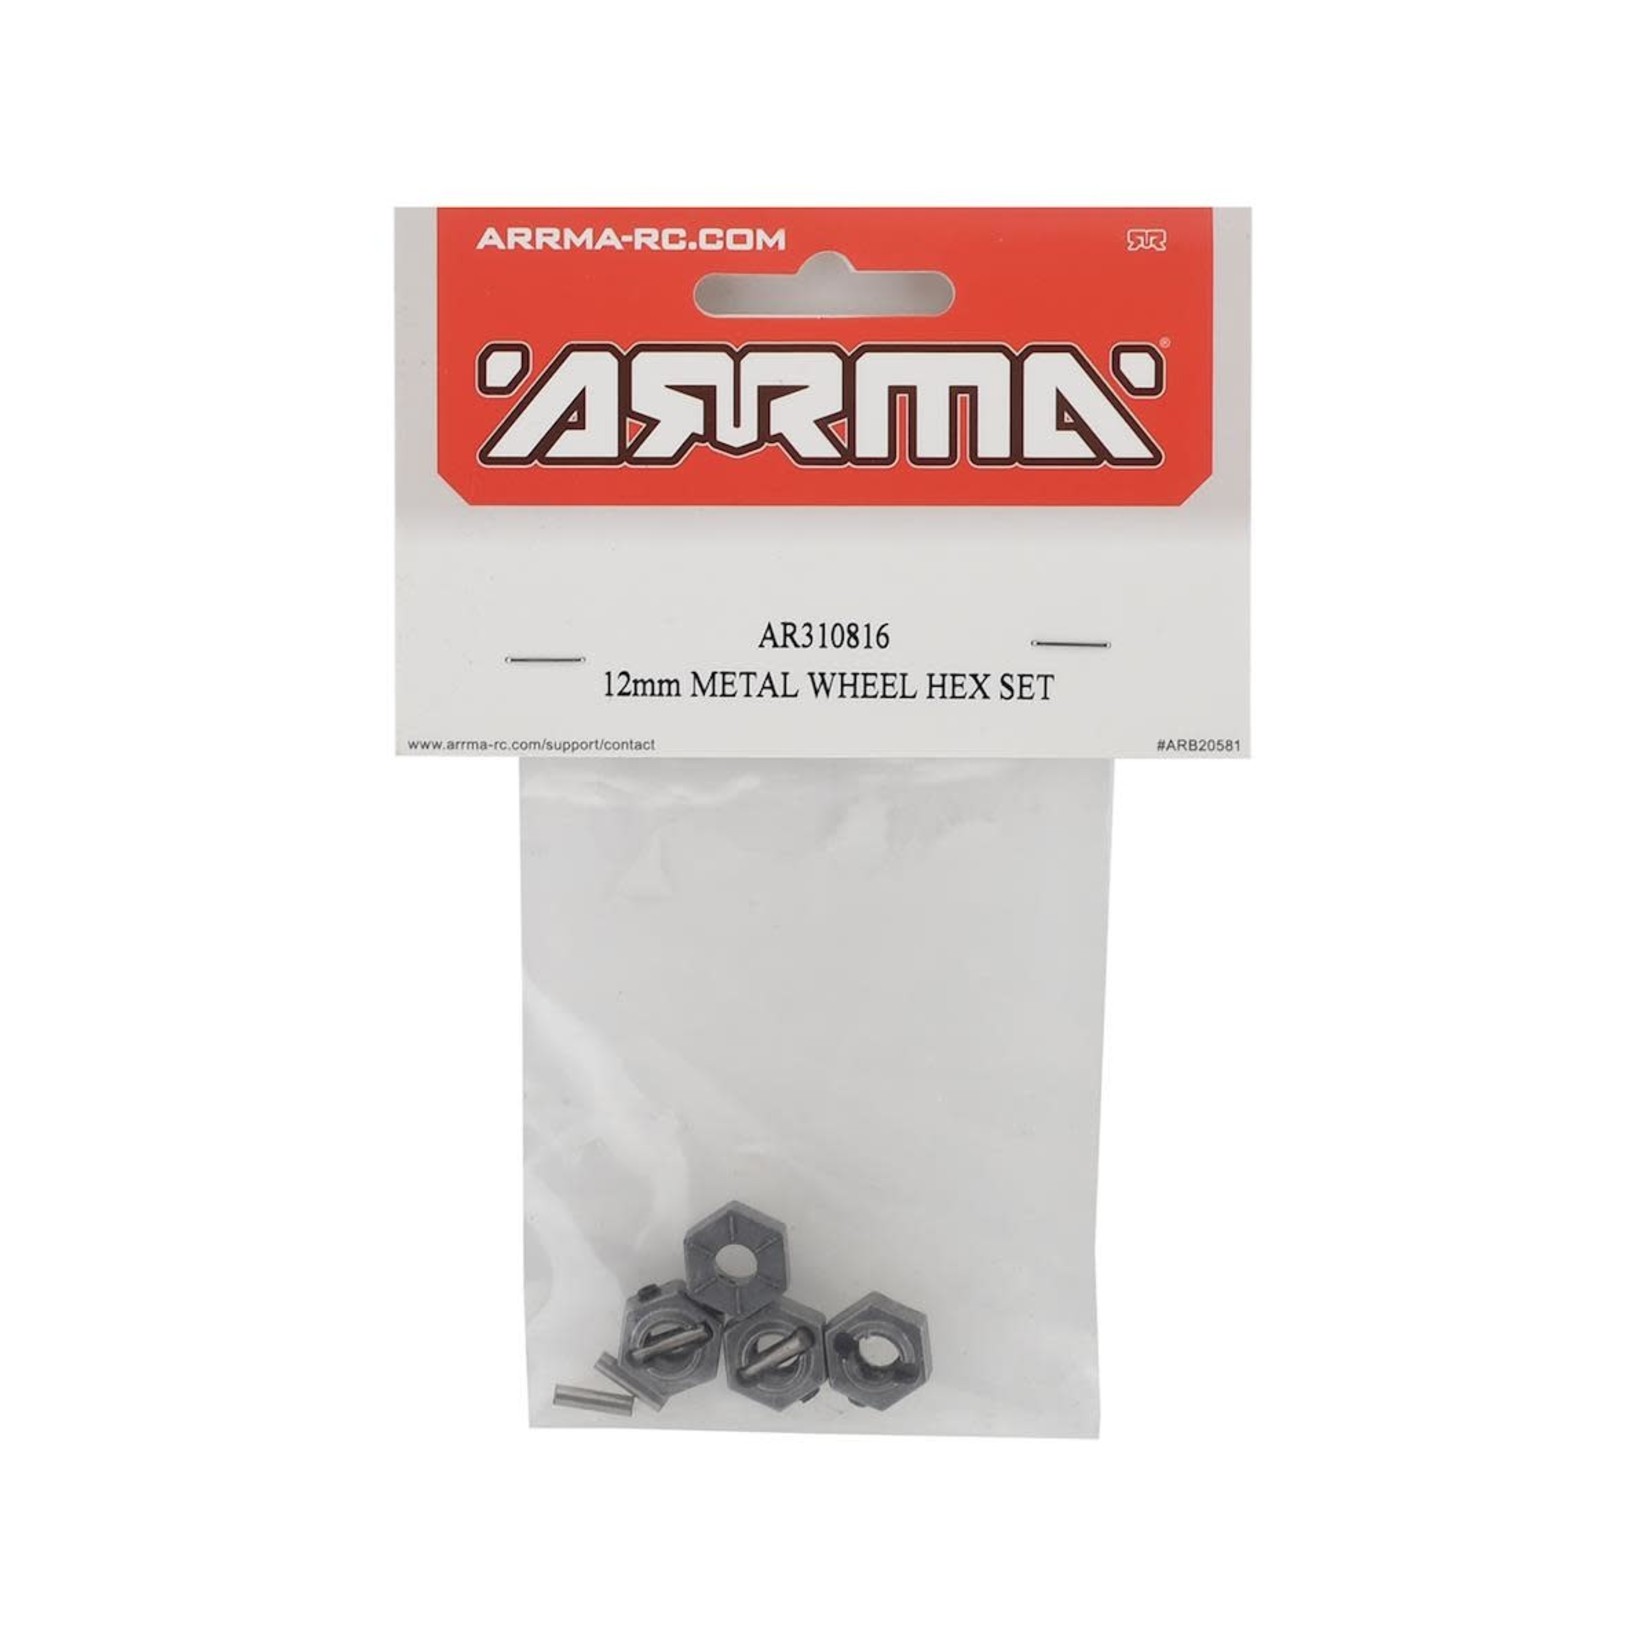 ARRMA Arrma 12mm Metal Wheel Hex (4) #AR310816